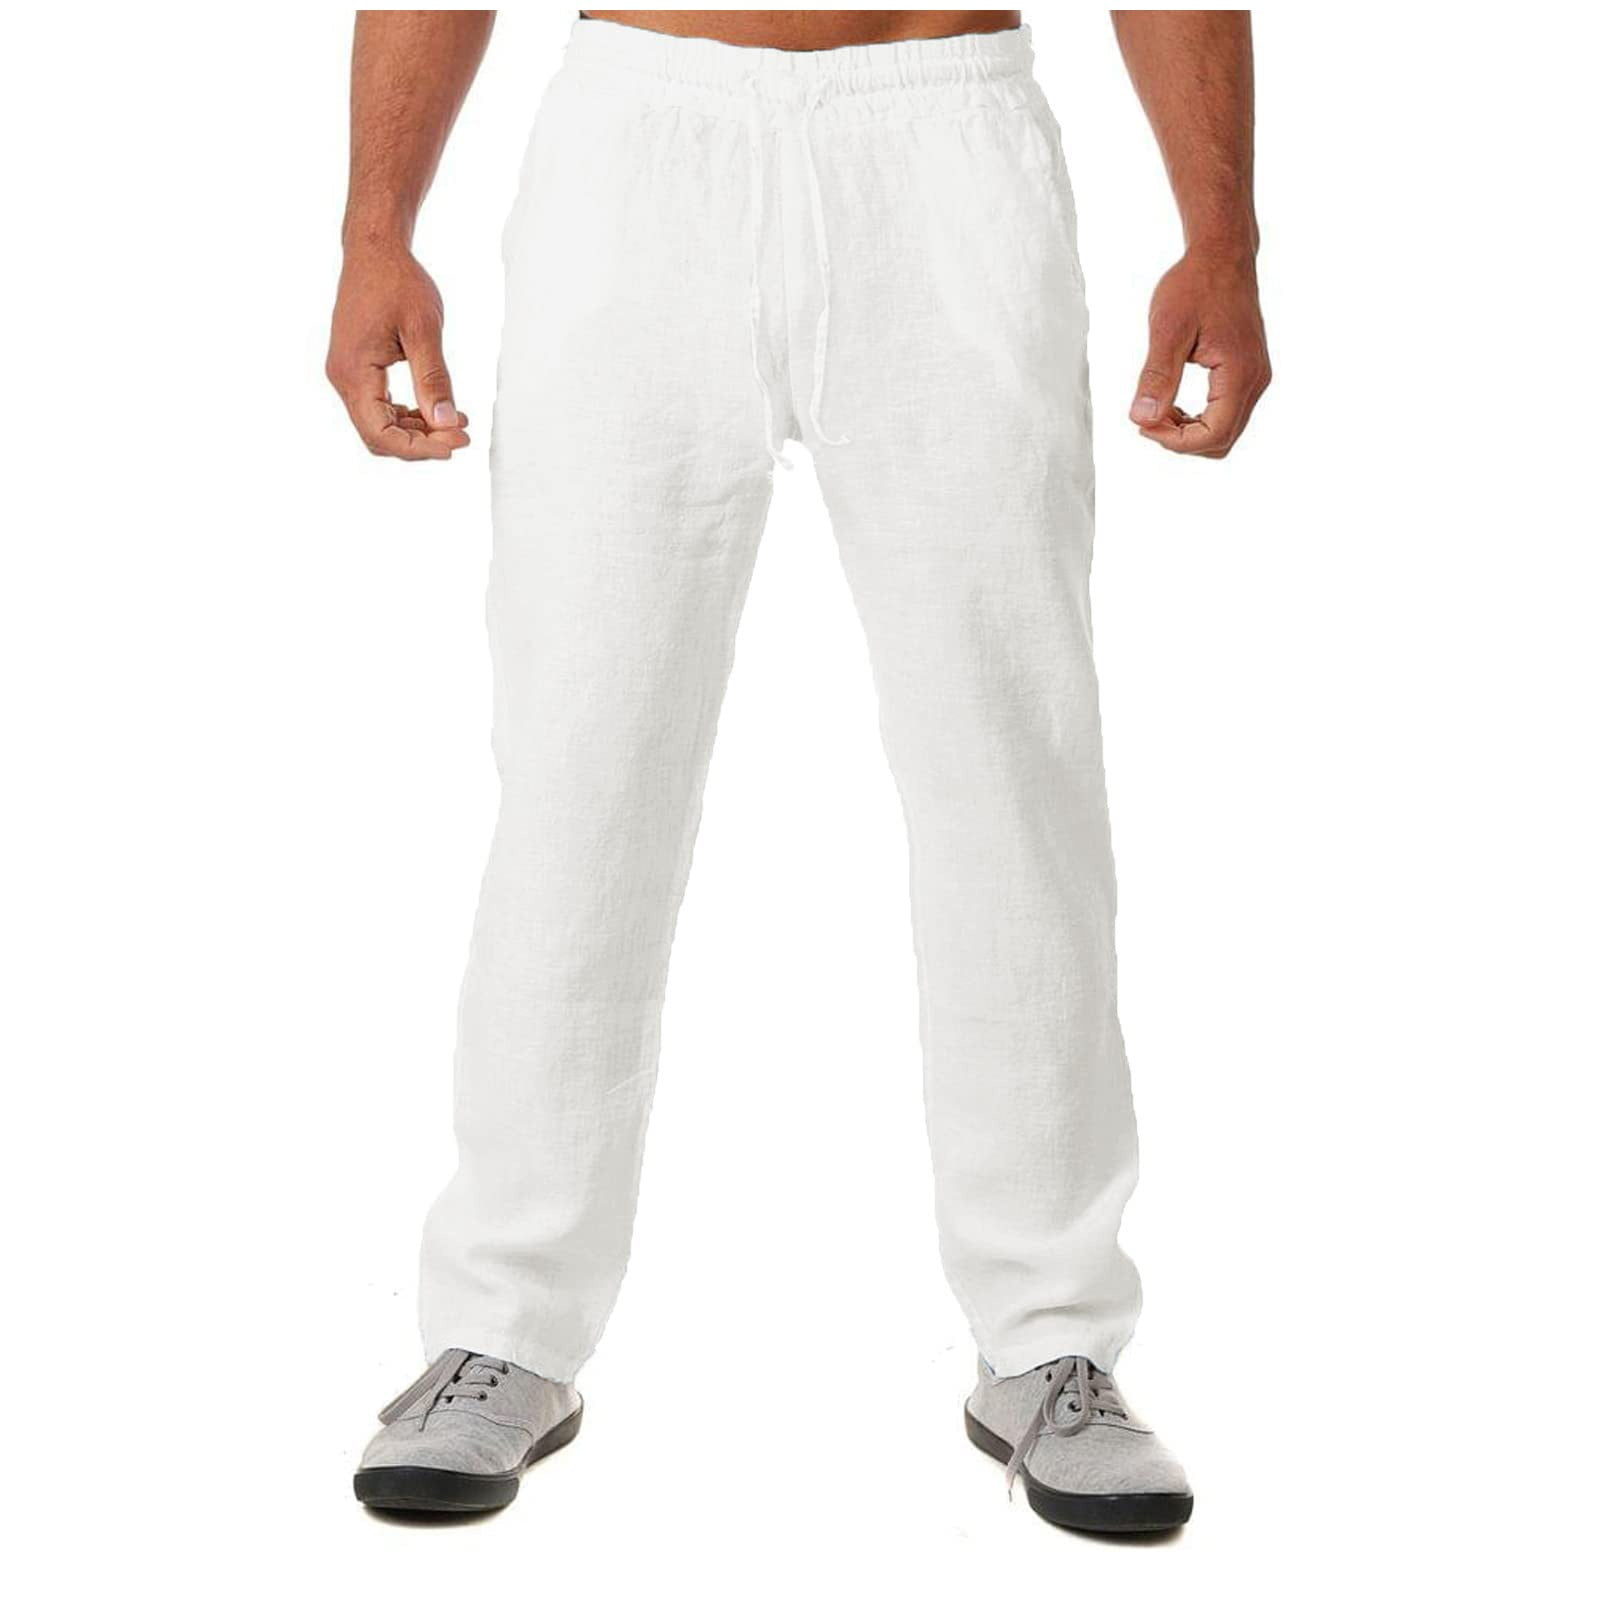 Mens Fleece Lined Pants with Zipper Mens Casual Loose Solid Half Waist  Fashion Pockets Long Pants Sweat Pants Slim Fit Running Fitness Pants   Walmartcom